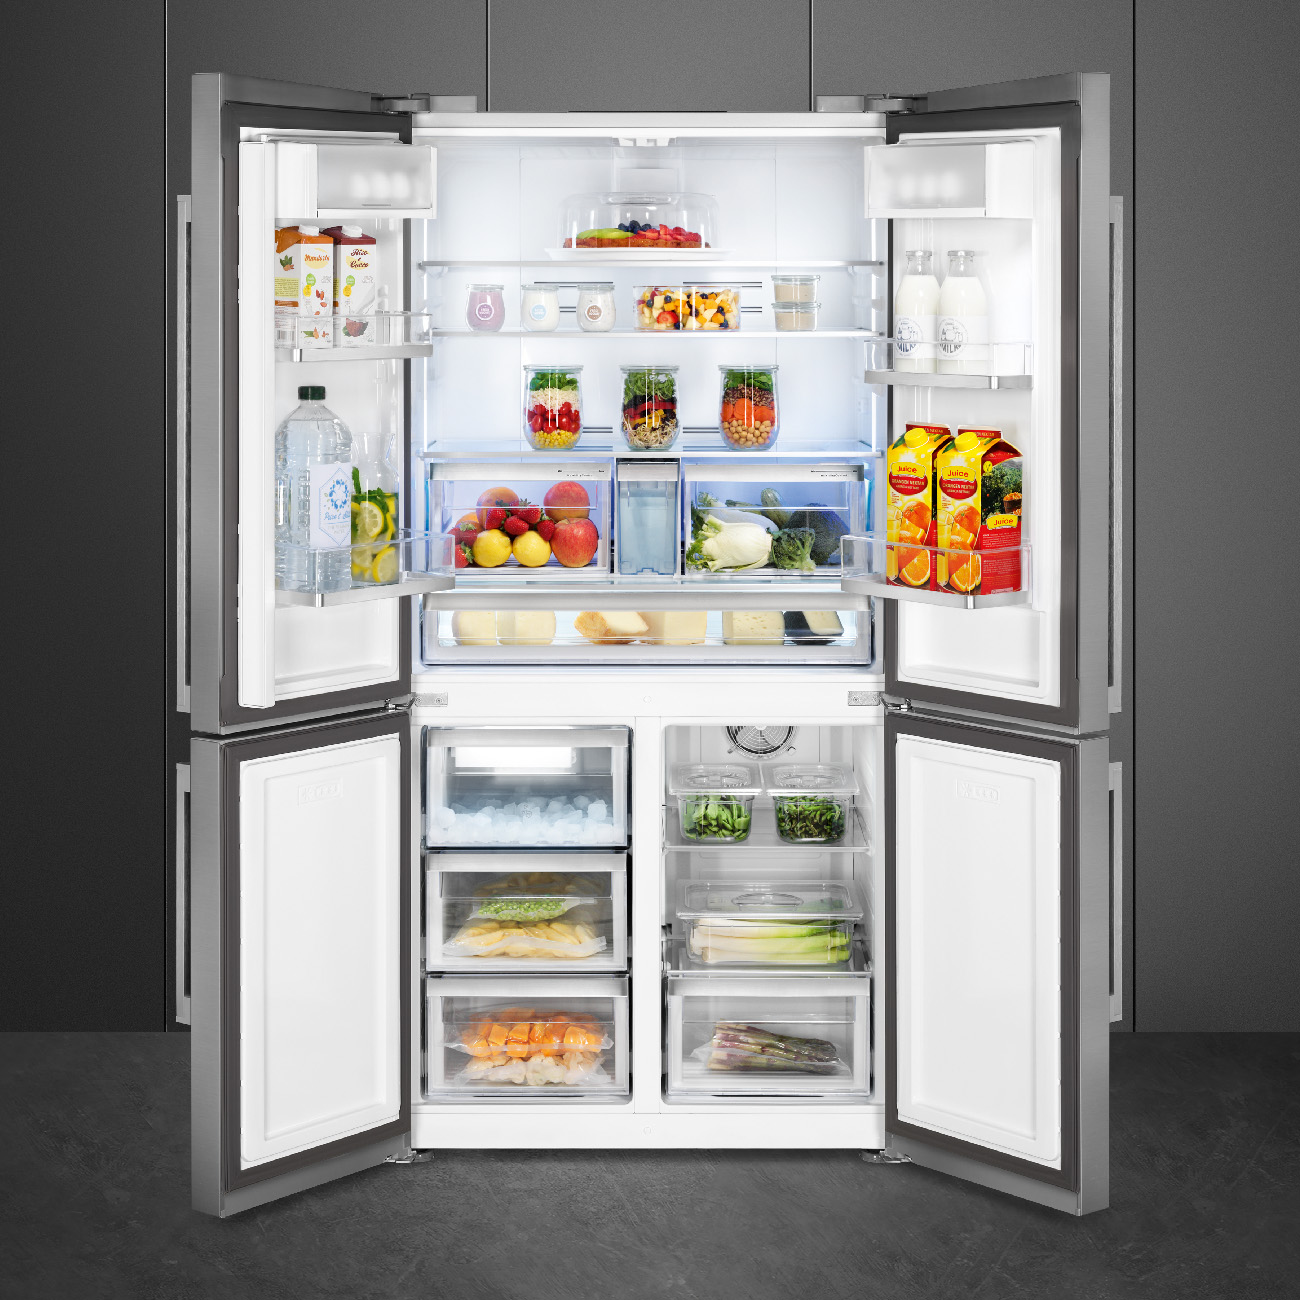 4 Doors Free standing refrigerator - Smeg_6